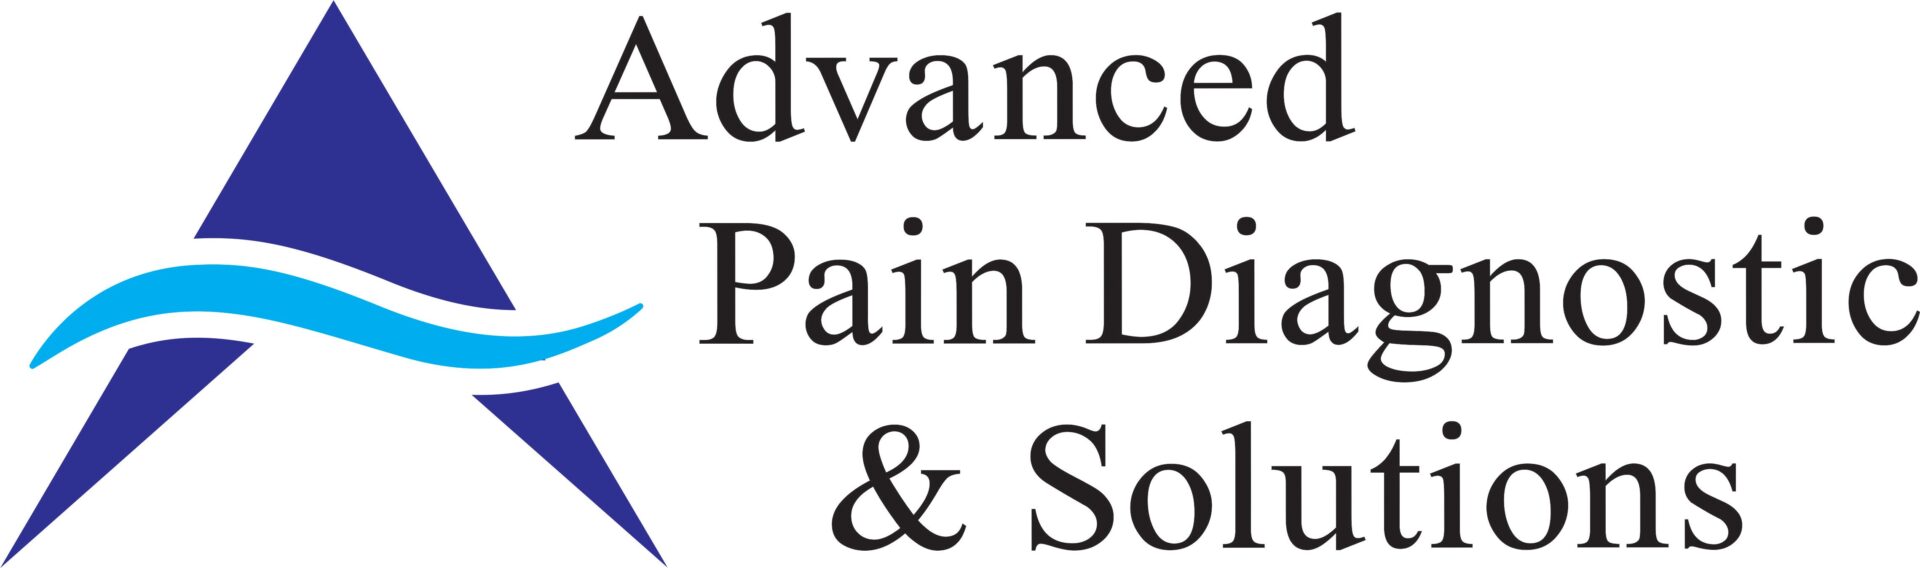 Advanced Pain Diagnostics and Solutions